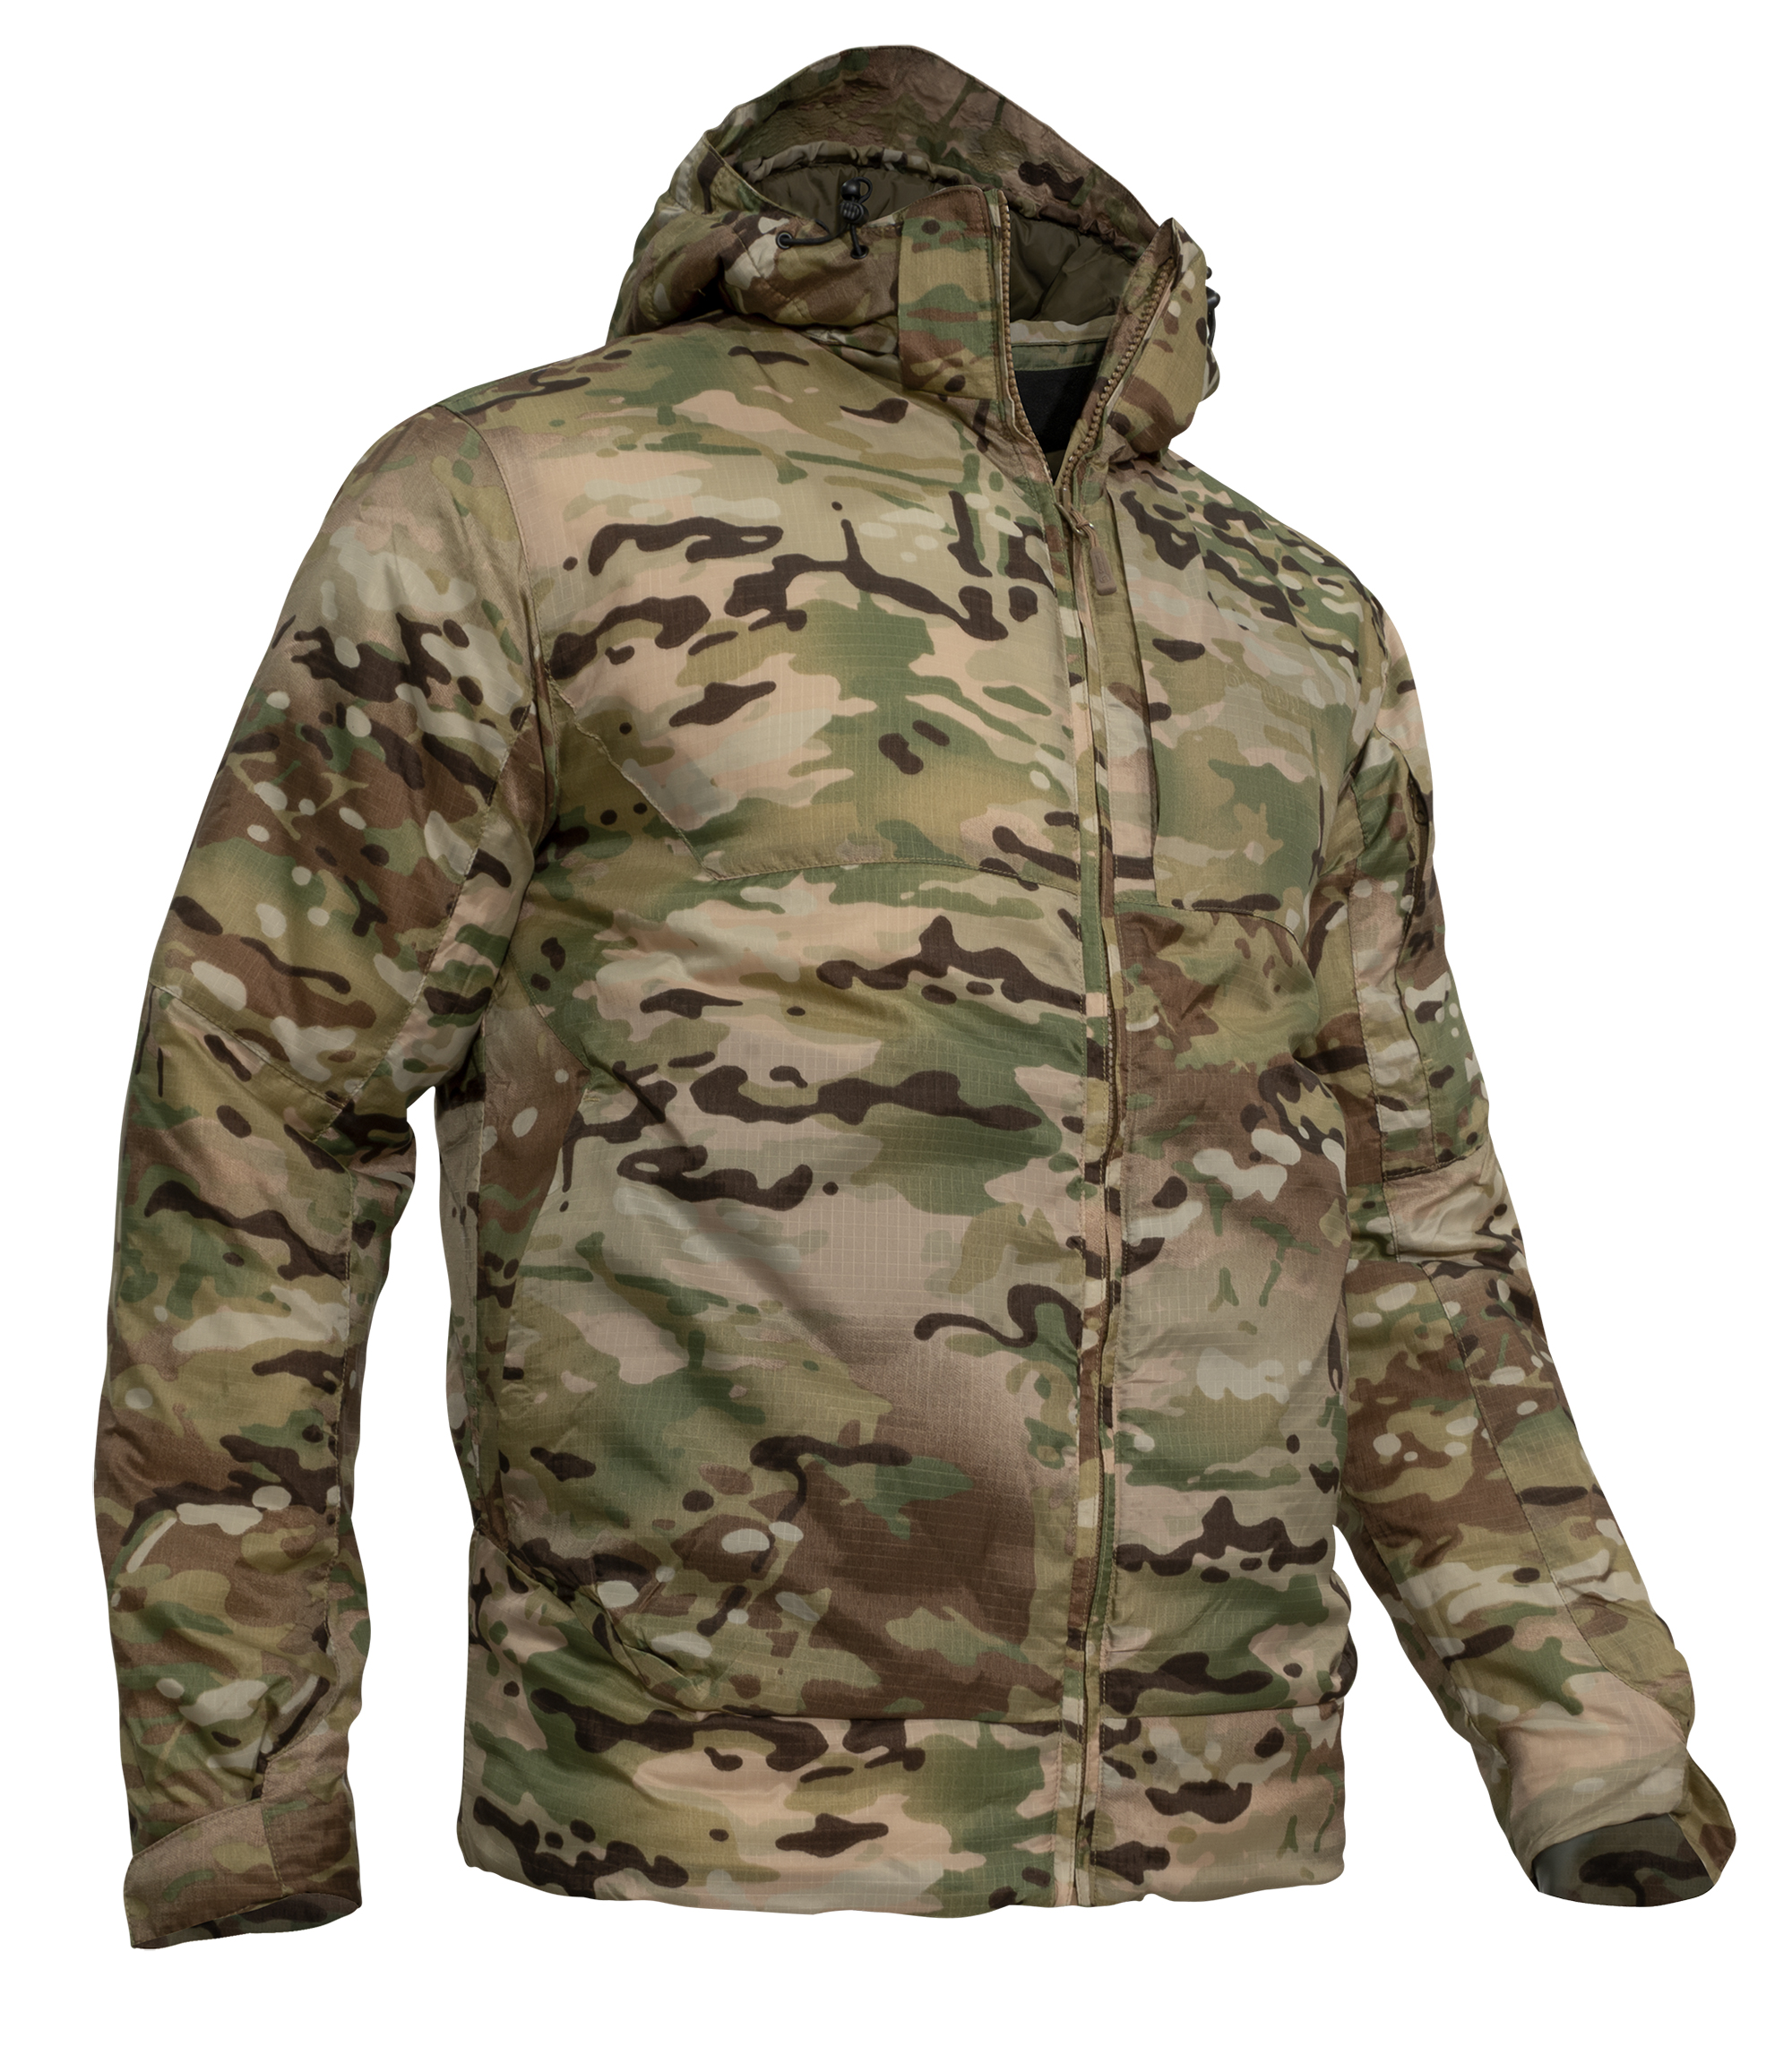 Snugpak winter jacket Spearhead Multicam | Recon Company